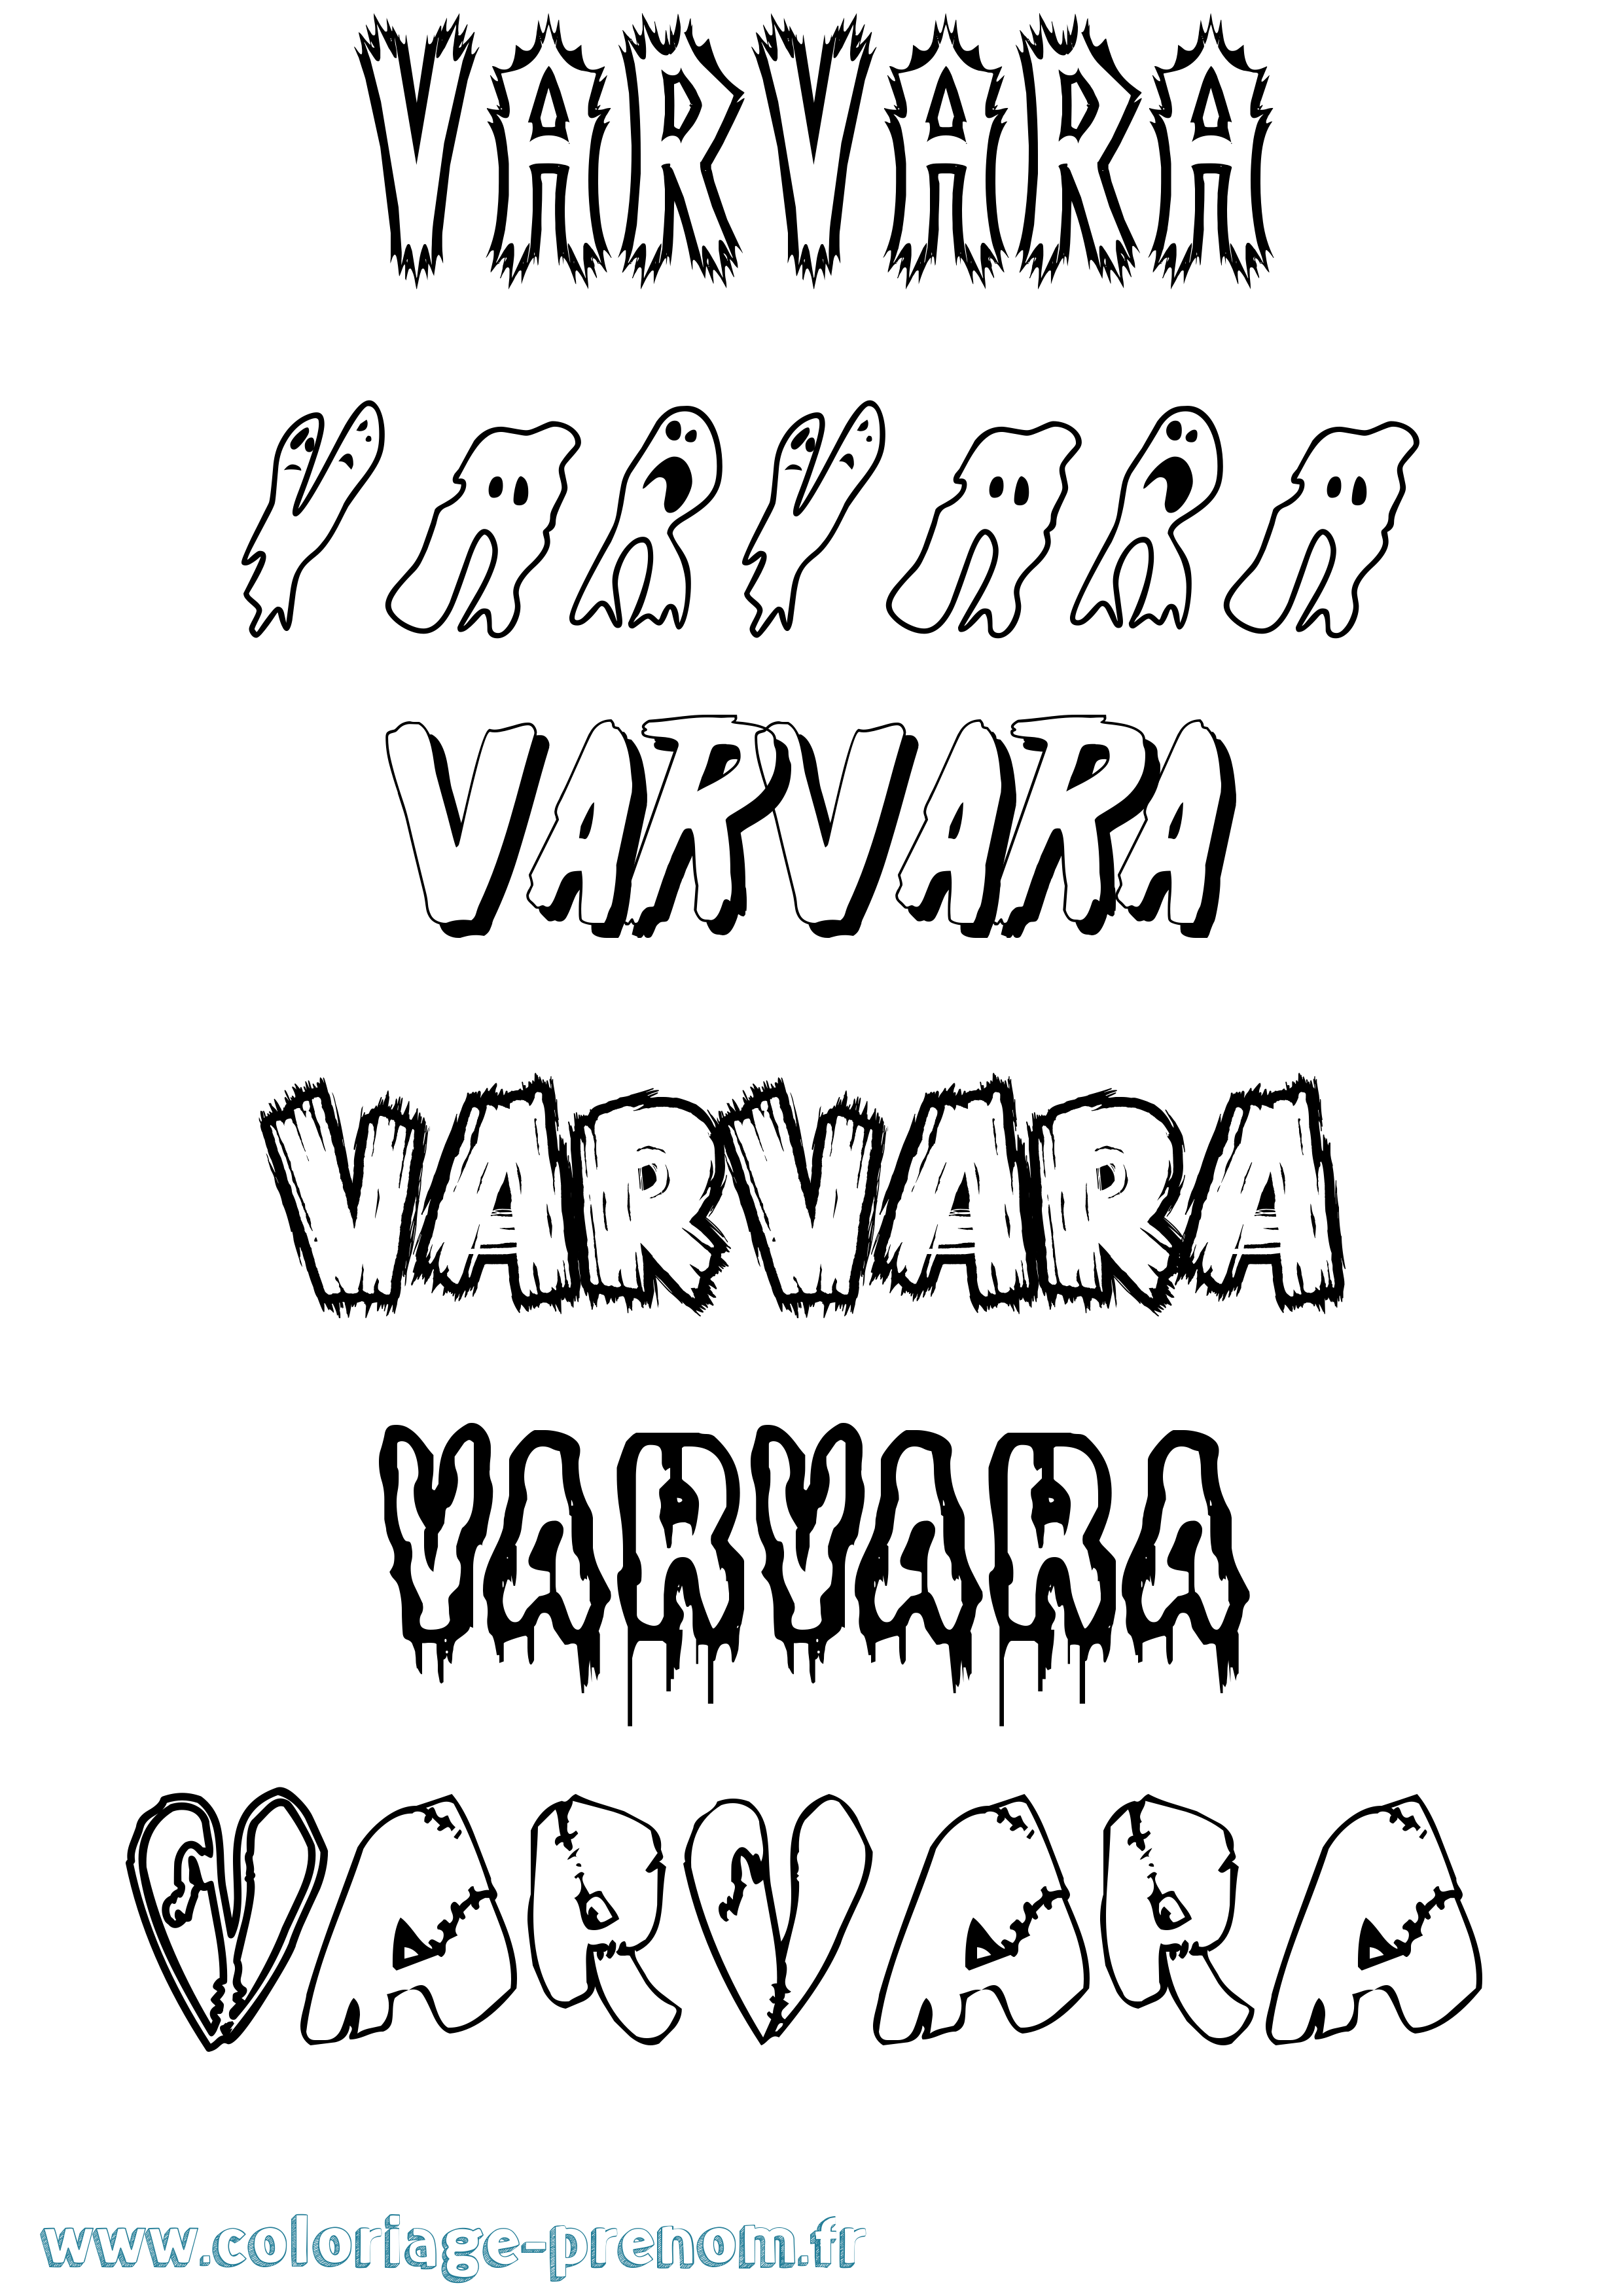 Coloriage prénom Varvara Frisson